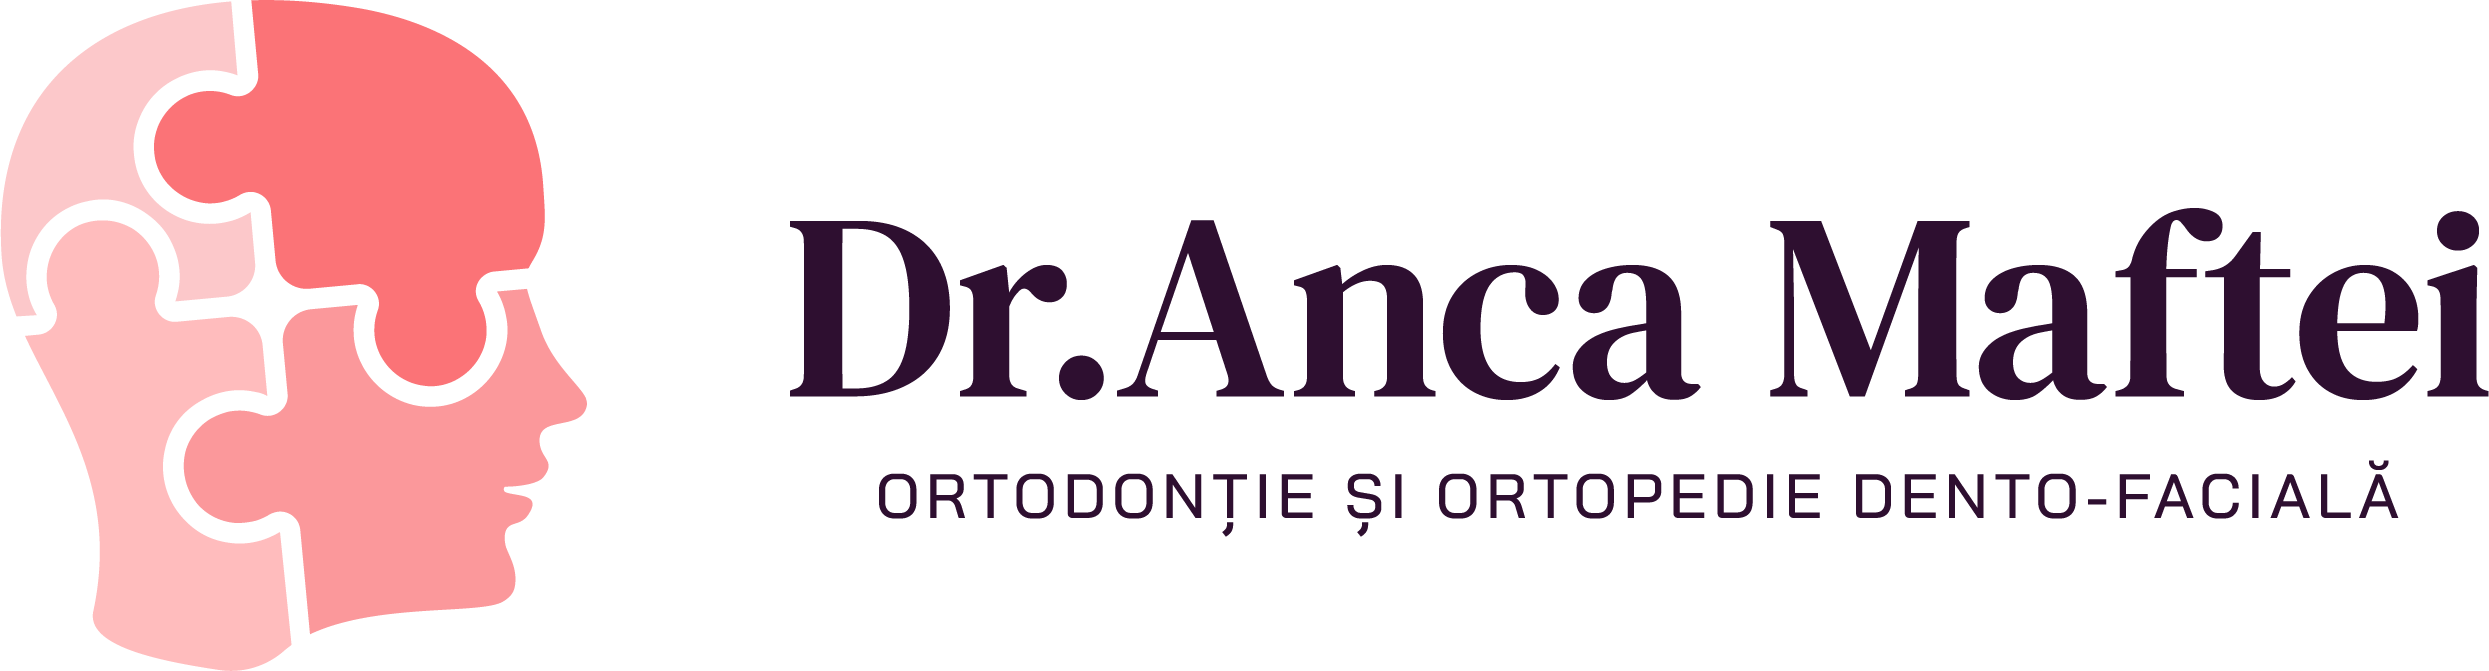 Dr. Anca Maftei logo